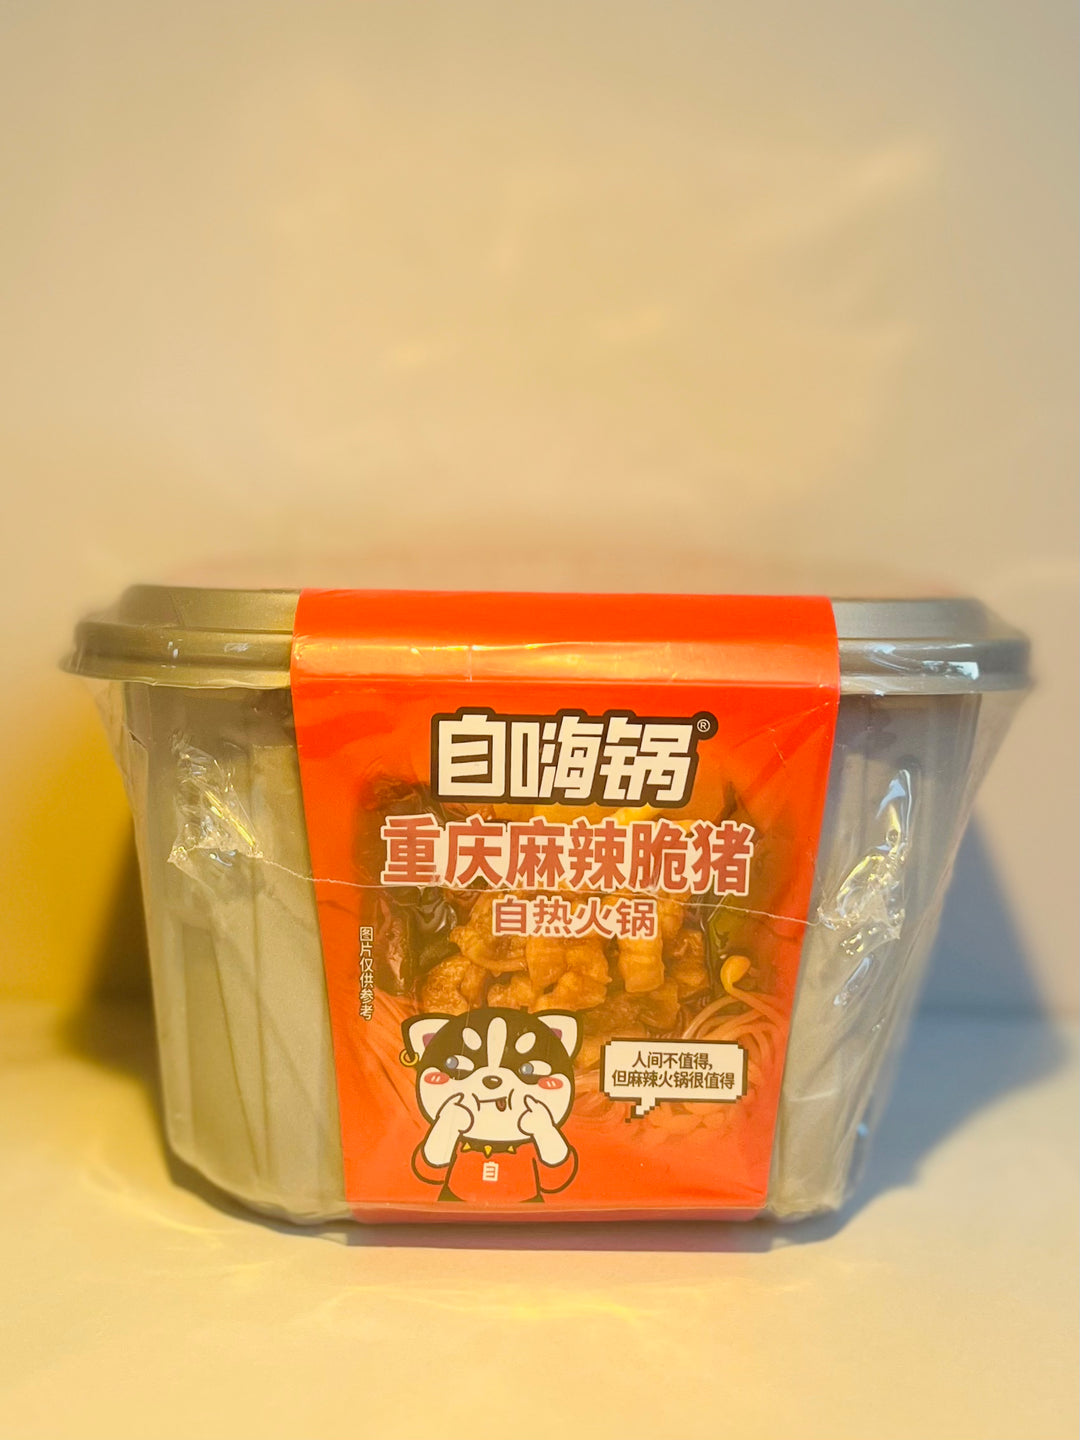 自嗨锅重庆麻辣脆猪自热火锅258g ZHG Instant Hot Pot Chongqing Pork Flavour